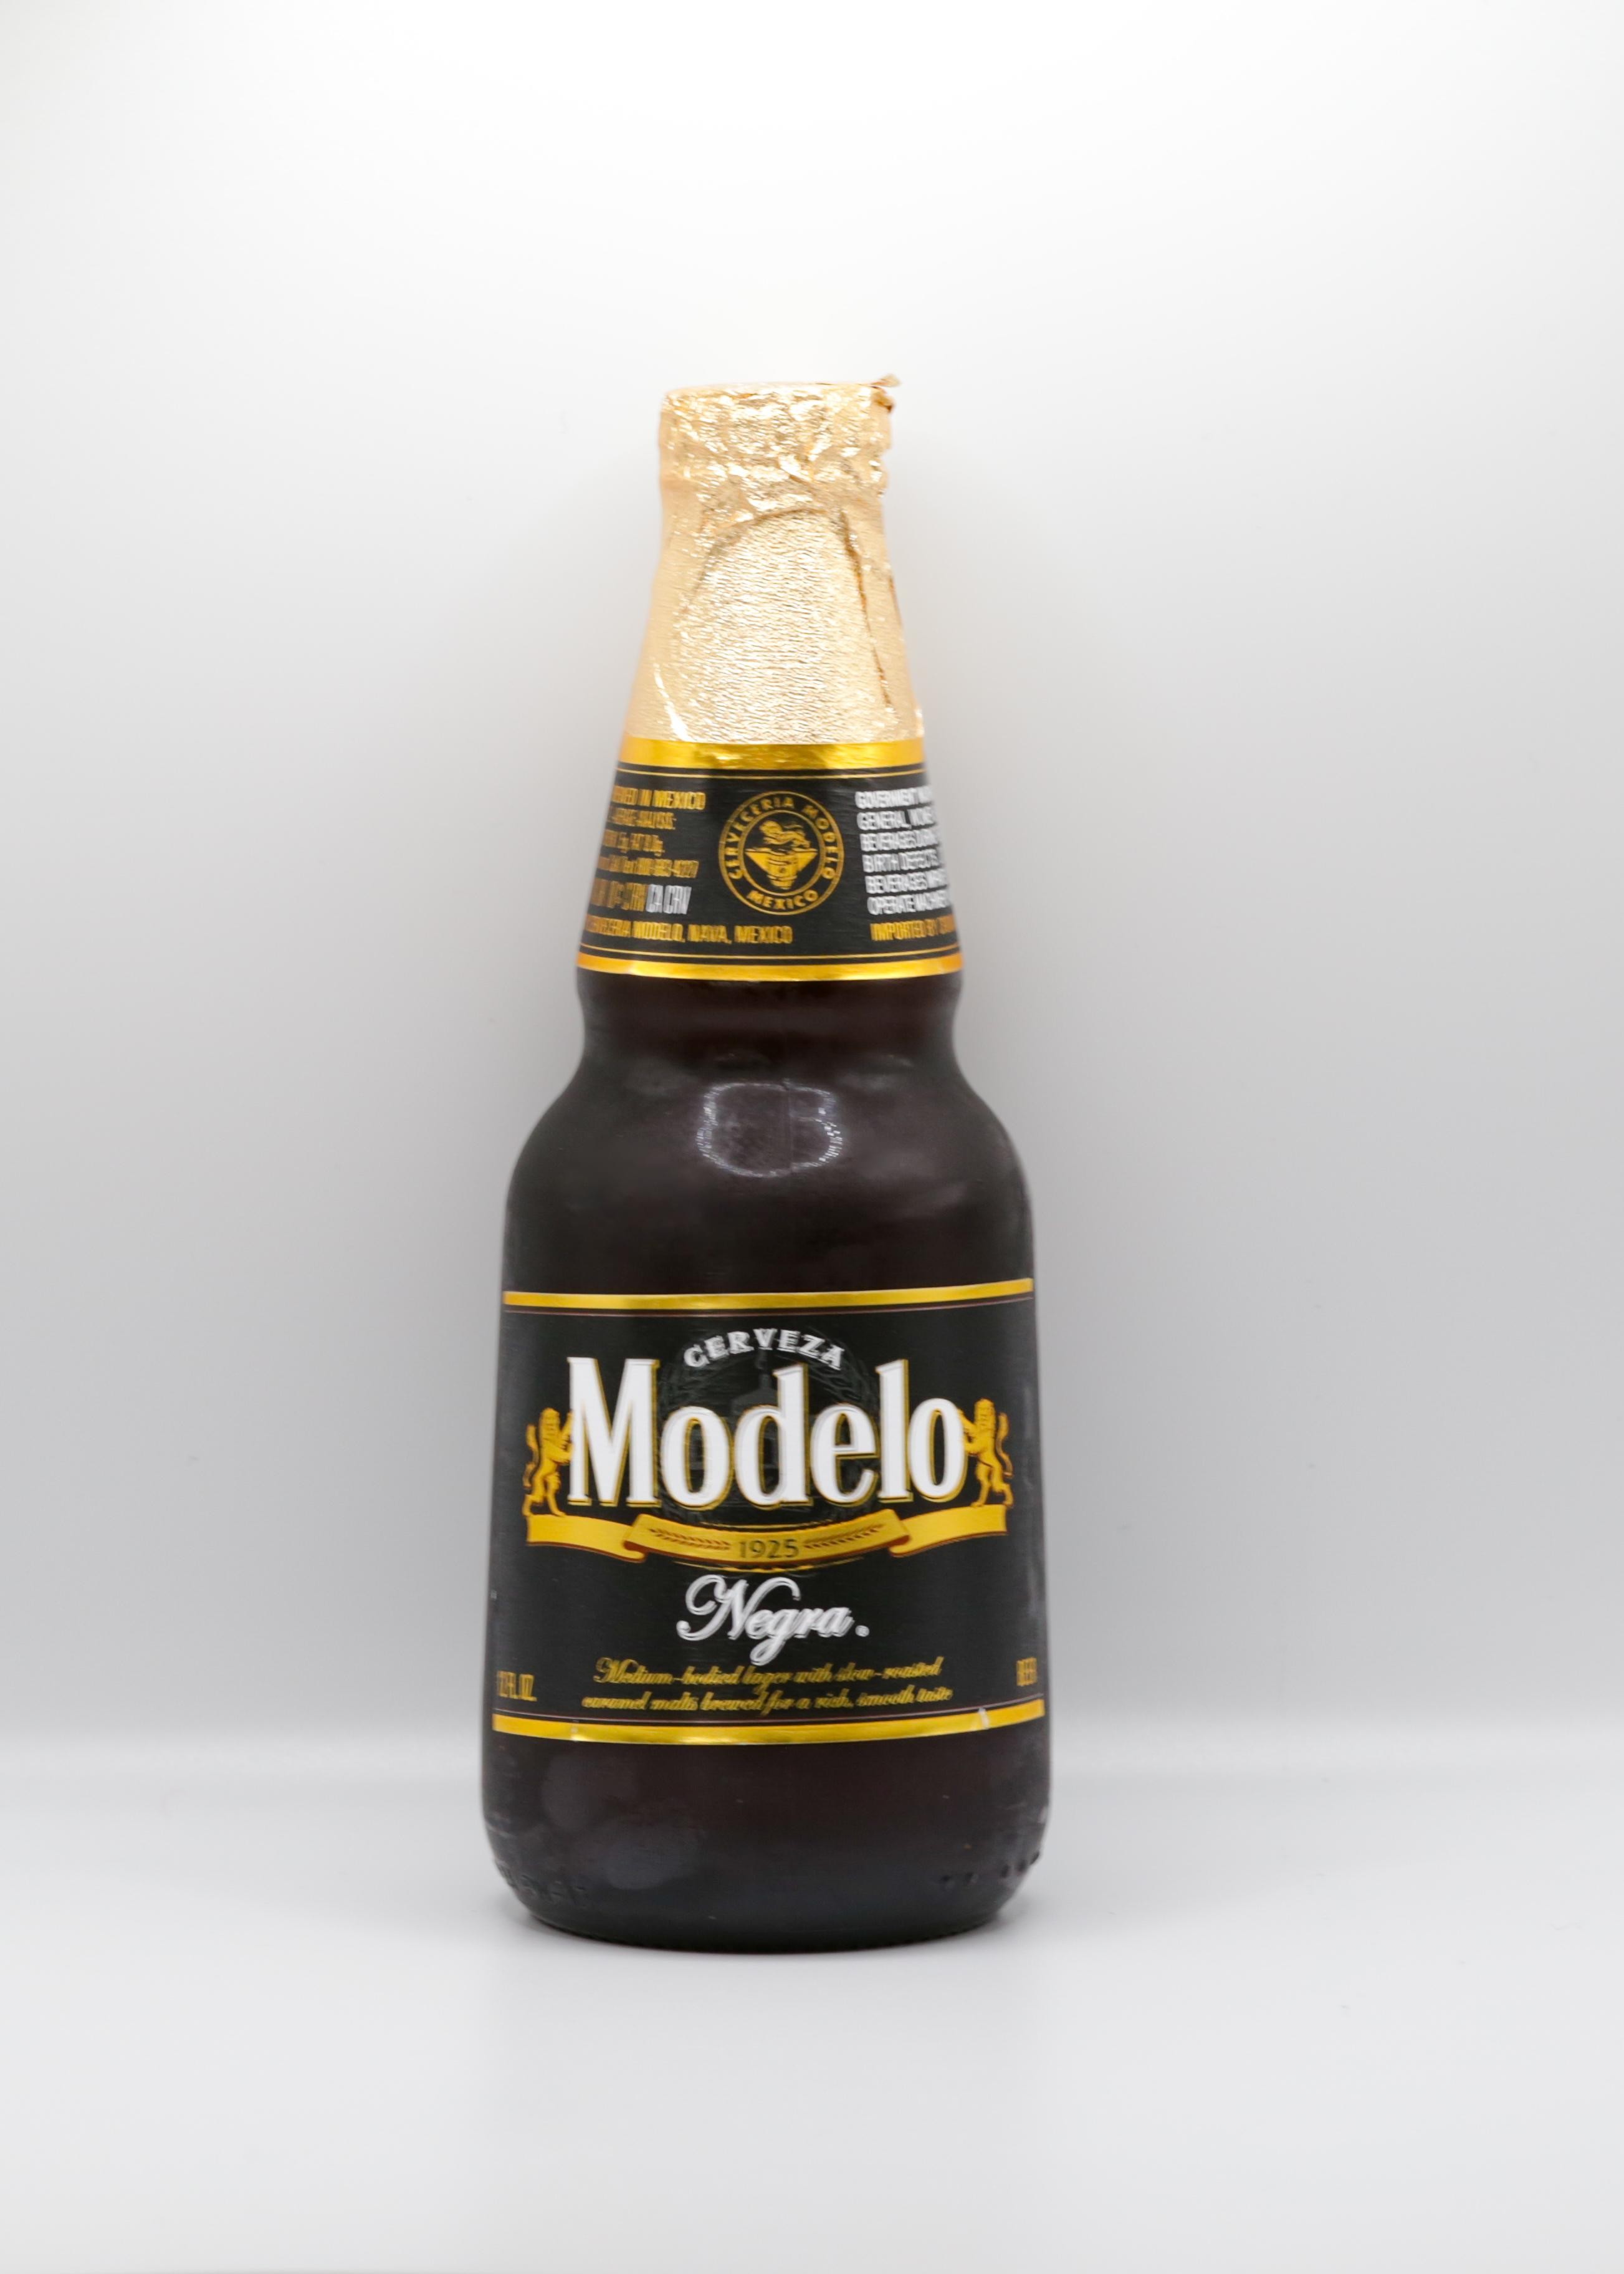 Modelo Negra (Mexico)